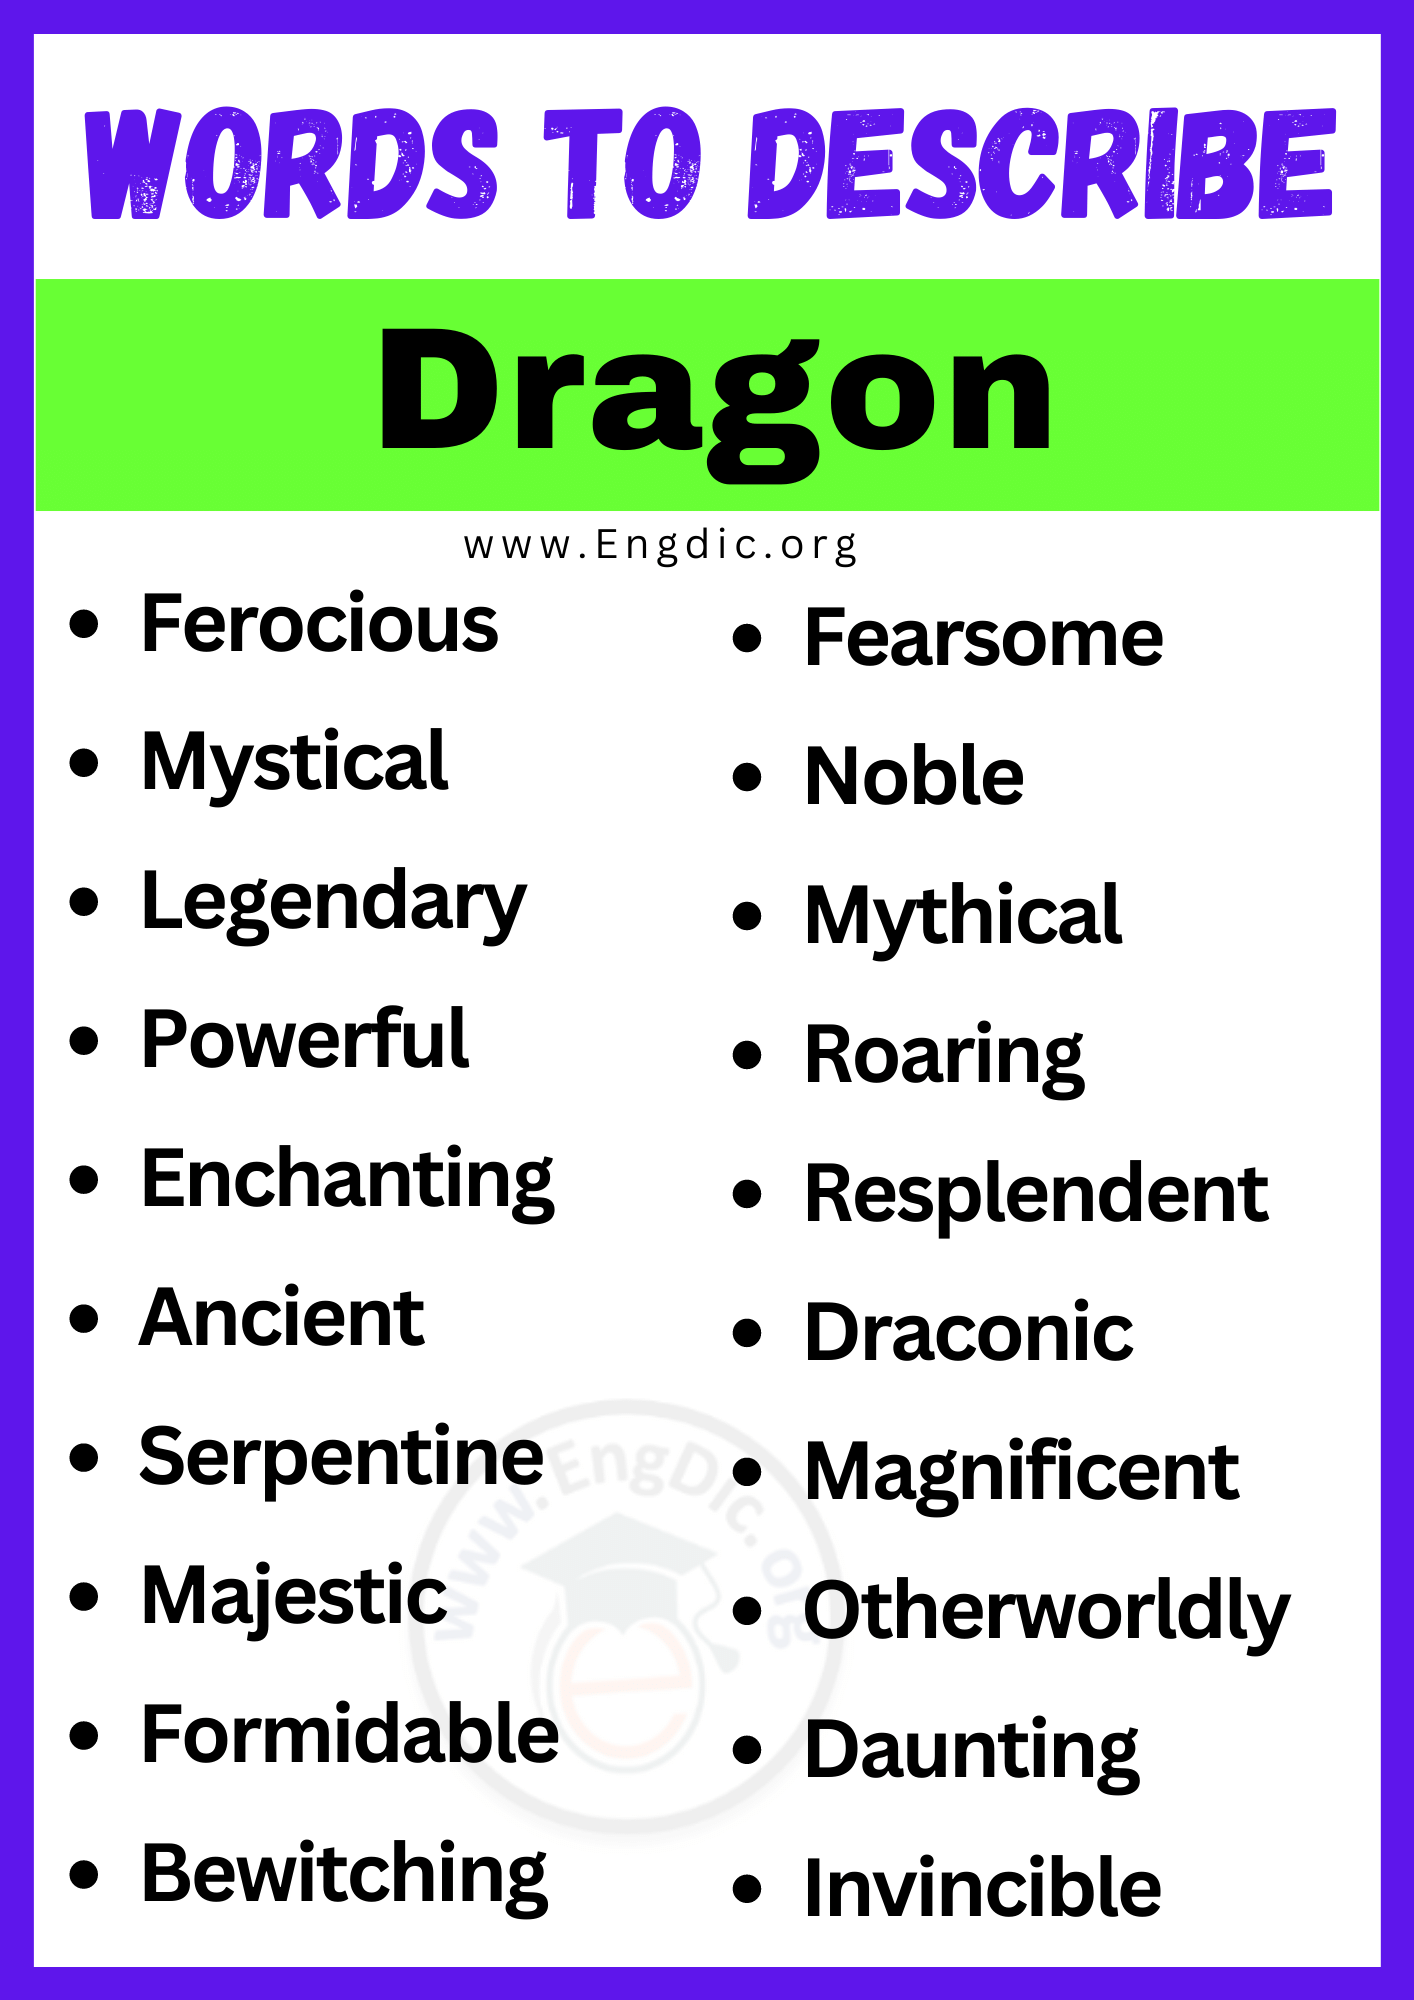 Words to Describe Dragon